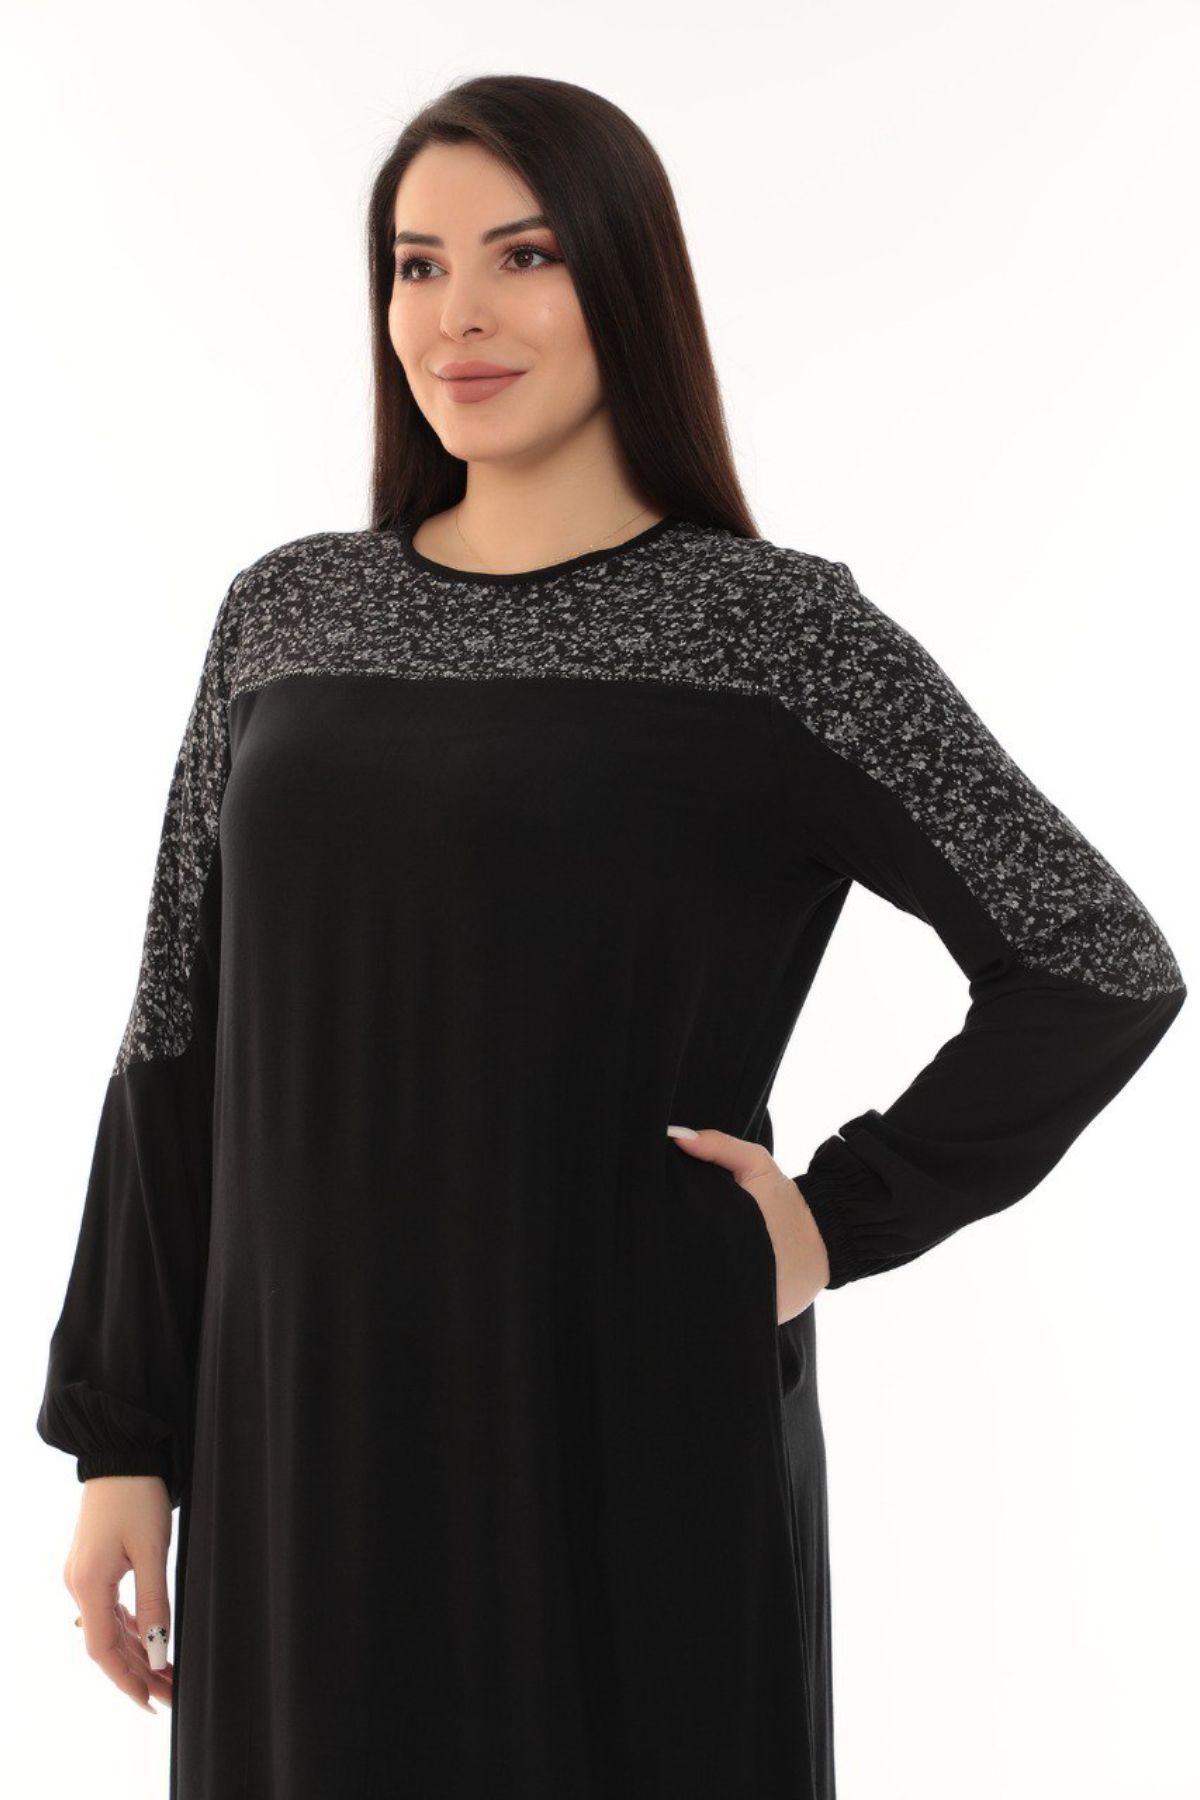 Bagiza 3157 BLACK Plus Size Women Dress | Dosso Dossi